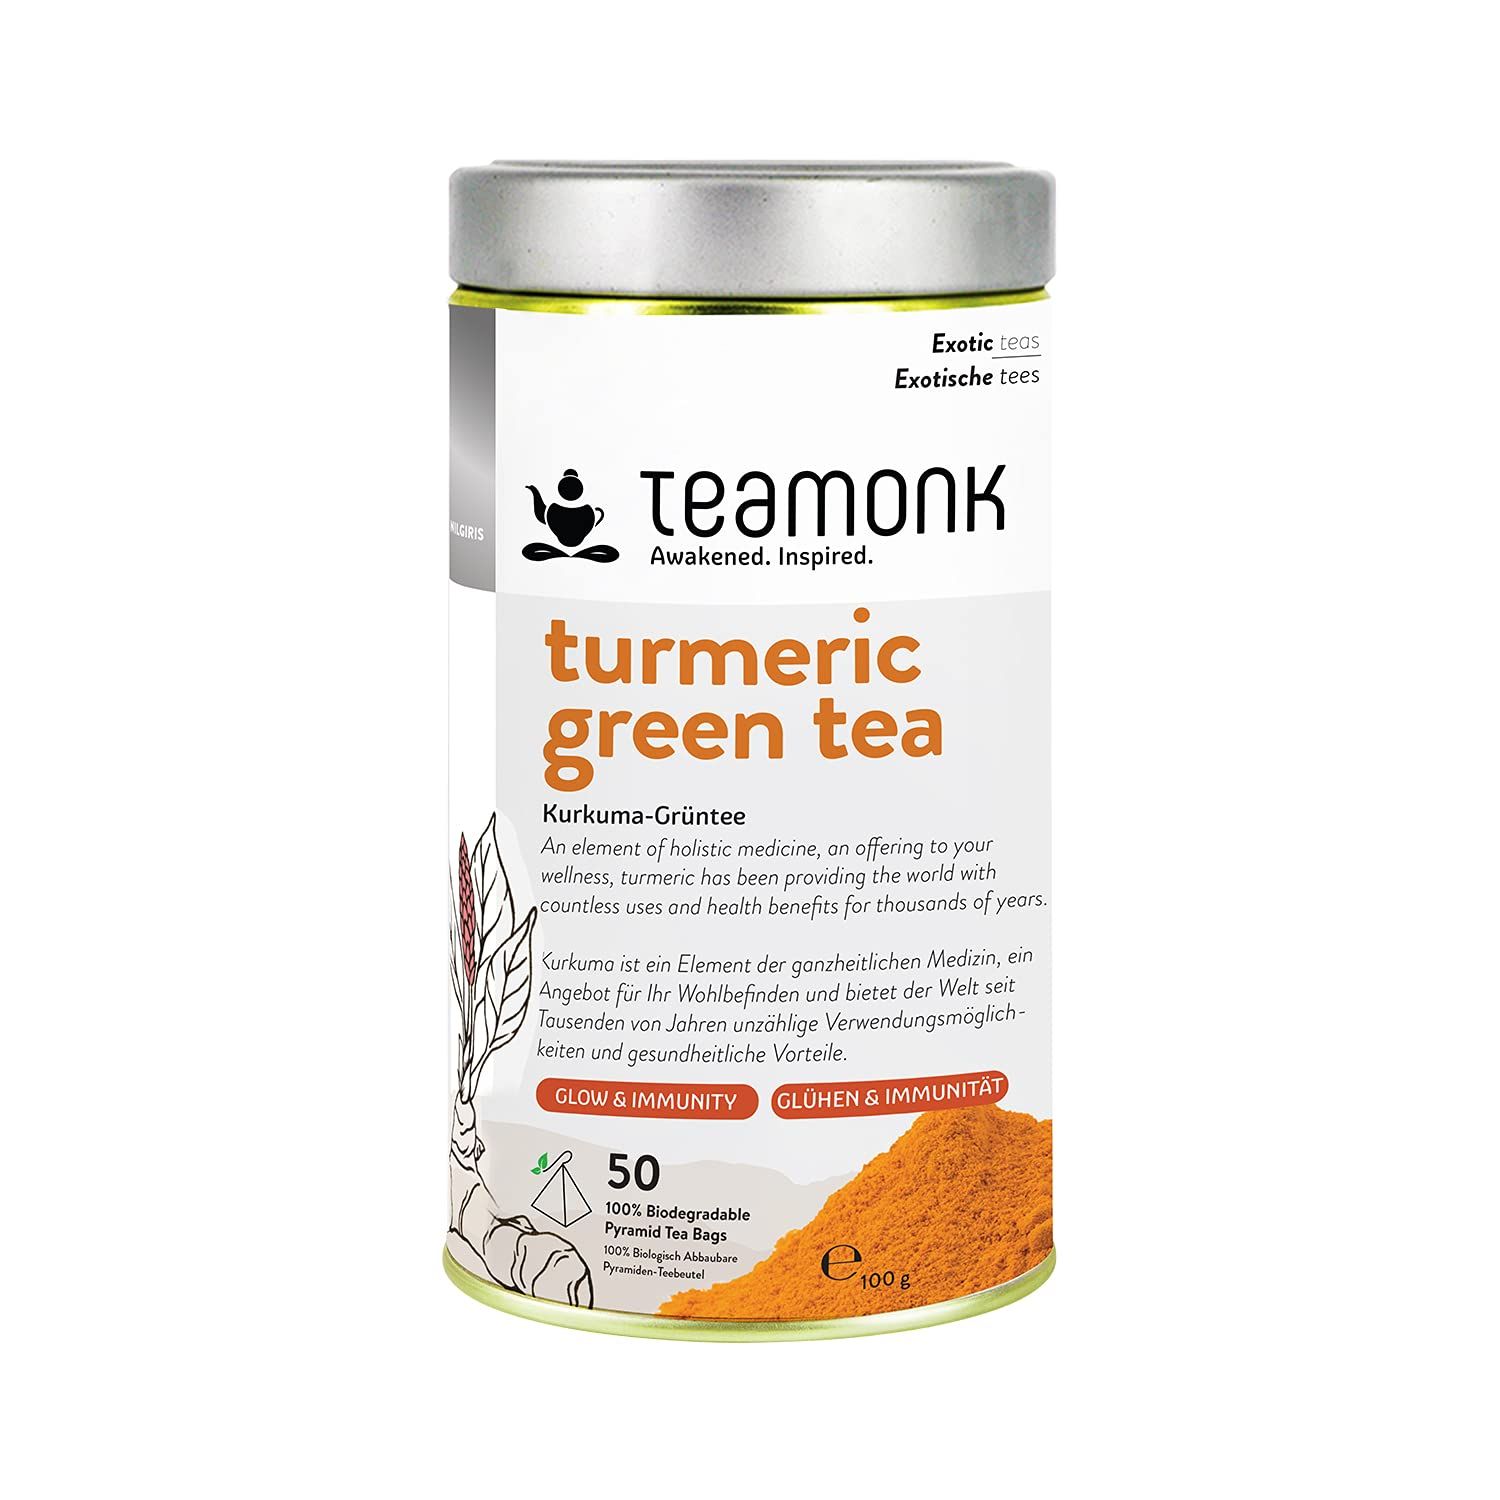 Teamonk Turmeric Green Tea Image